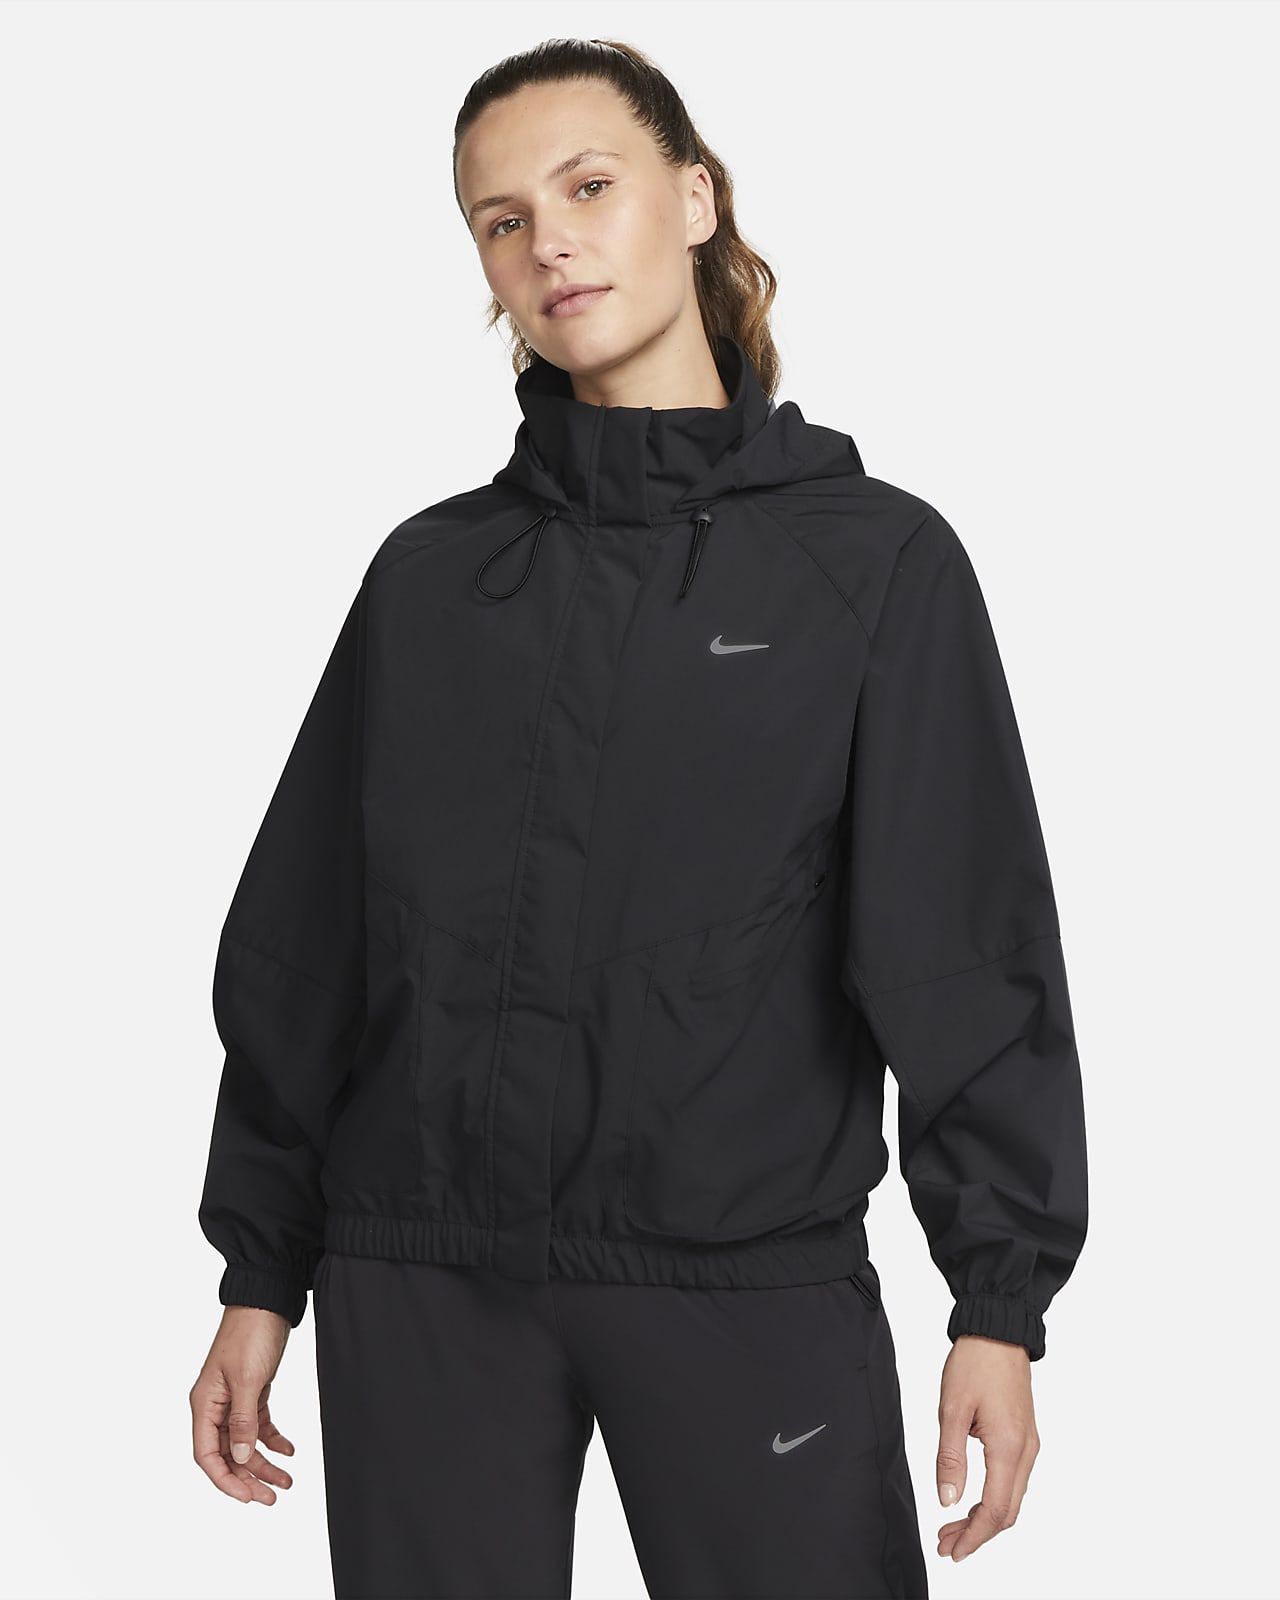 Storm-FIT Swift Jacket. Nike.com